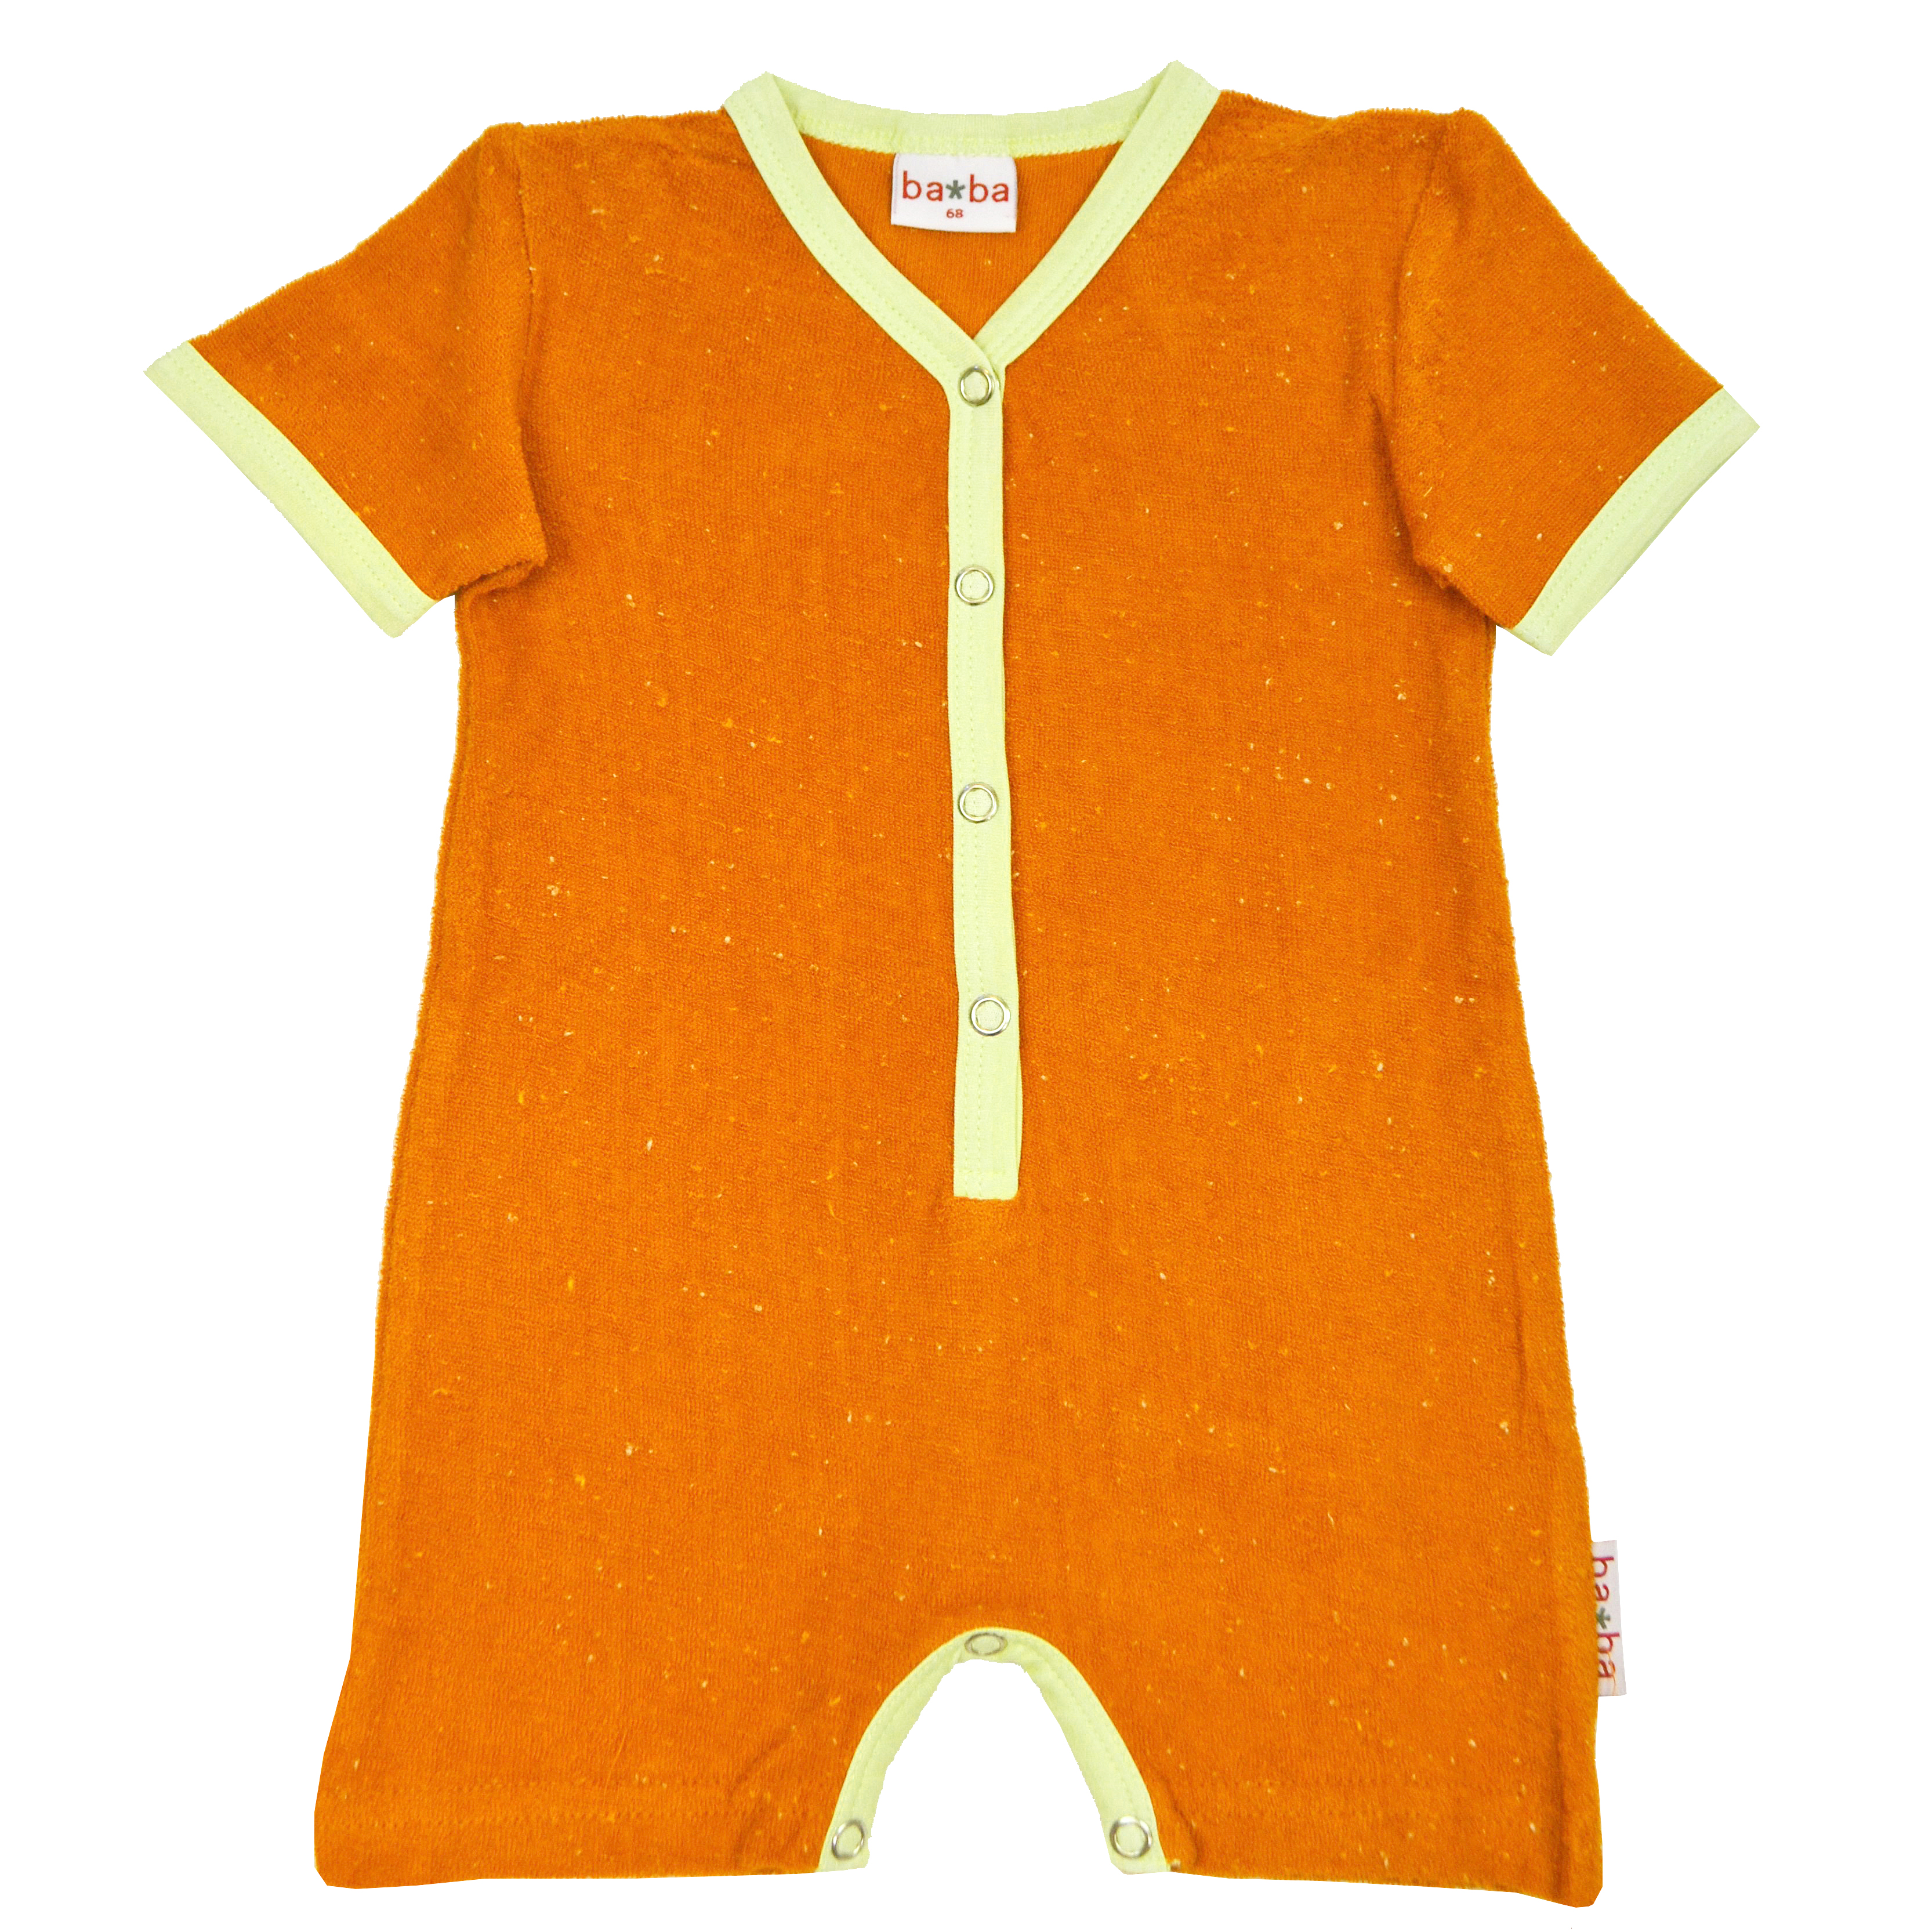 Baba Kidswear Baby Spieler kurz orange